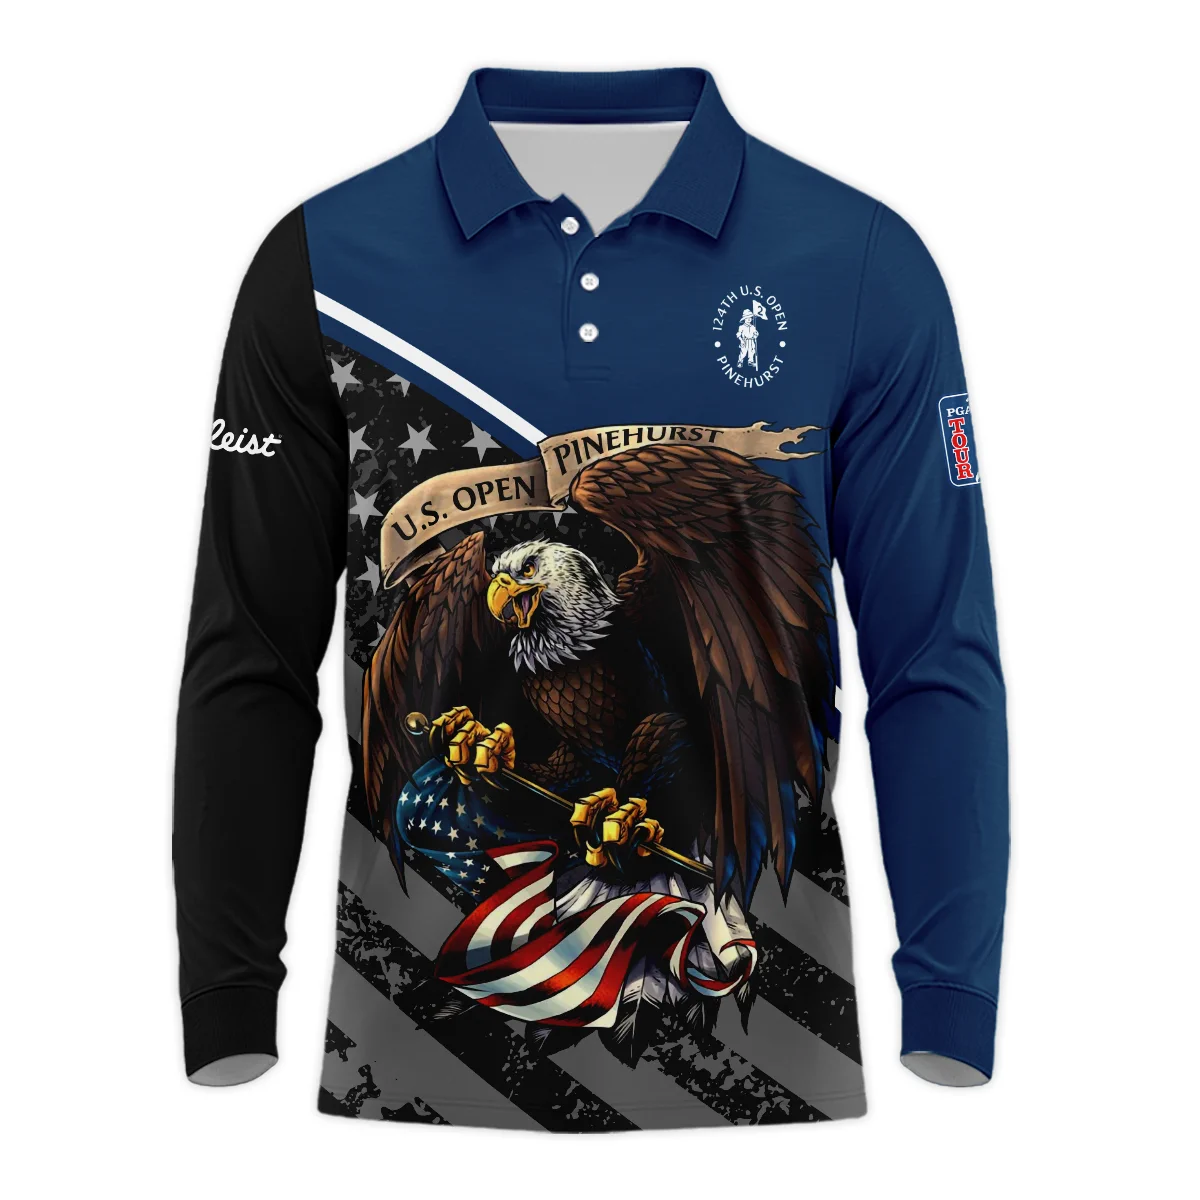 Special Version 124th U.S. Open Pinehurst Titleist Unisex Sweatshirt Color Blue Eagle USA  Sweatshirt